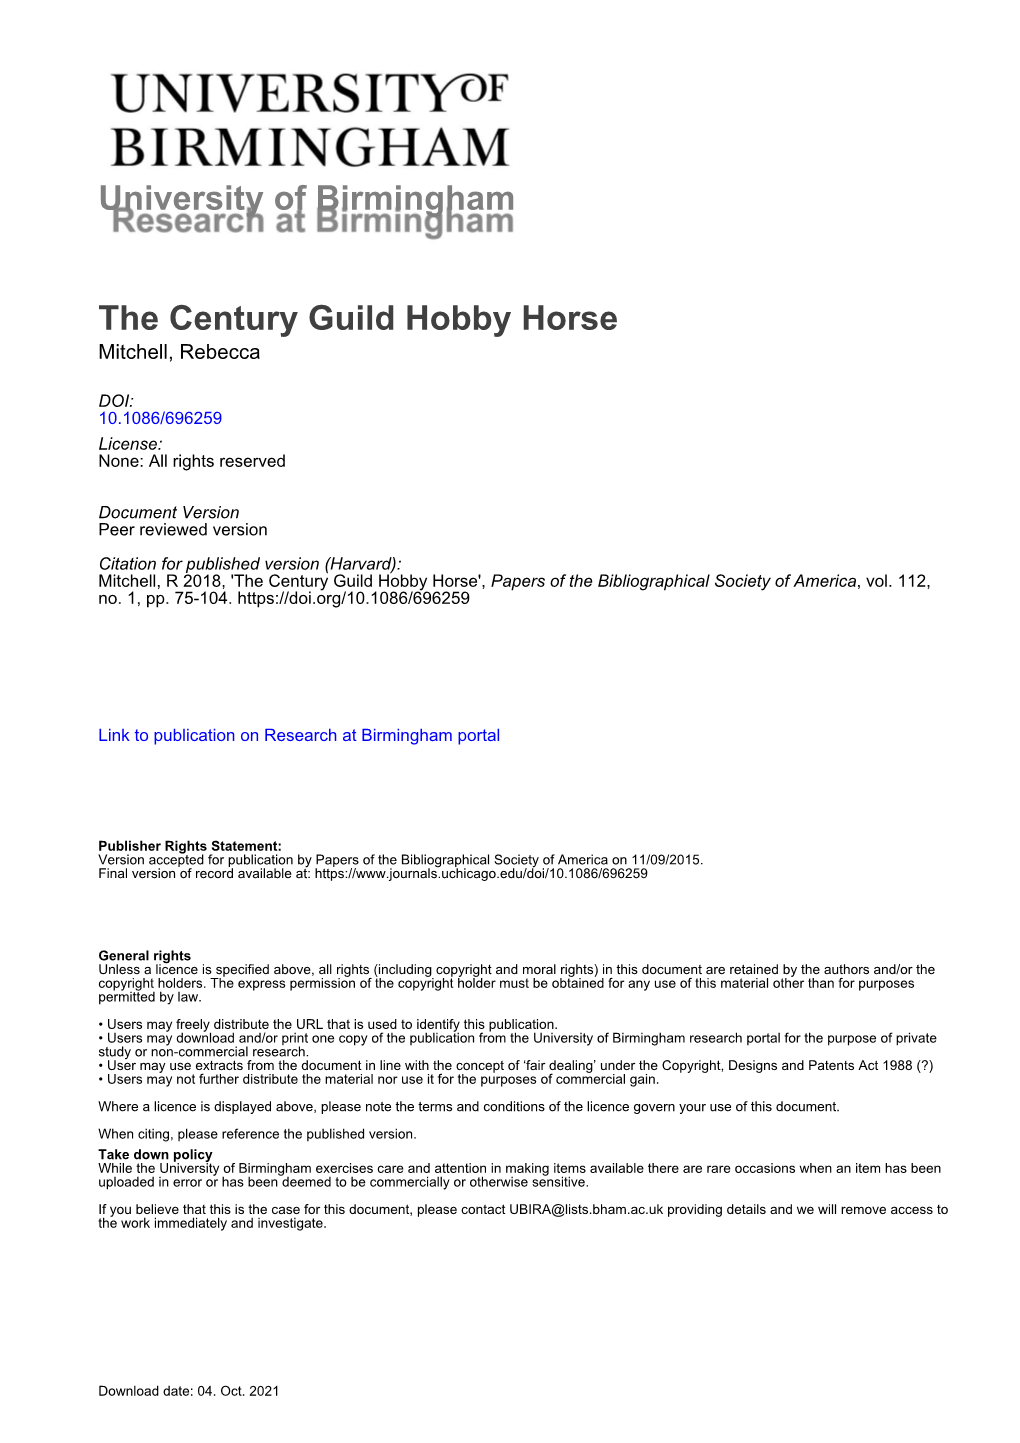 University of Birmingham the Century Guild Hobby Horse